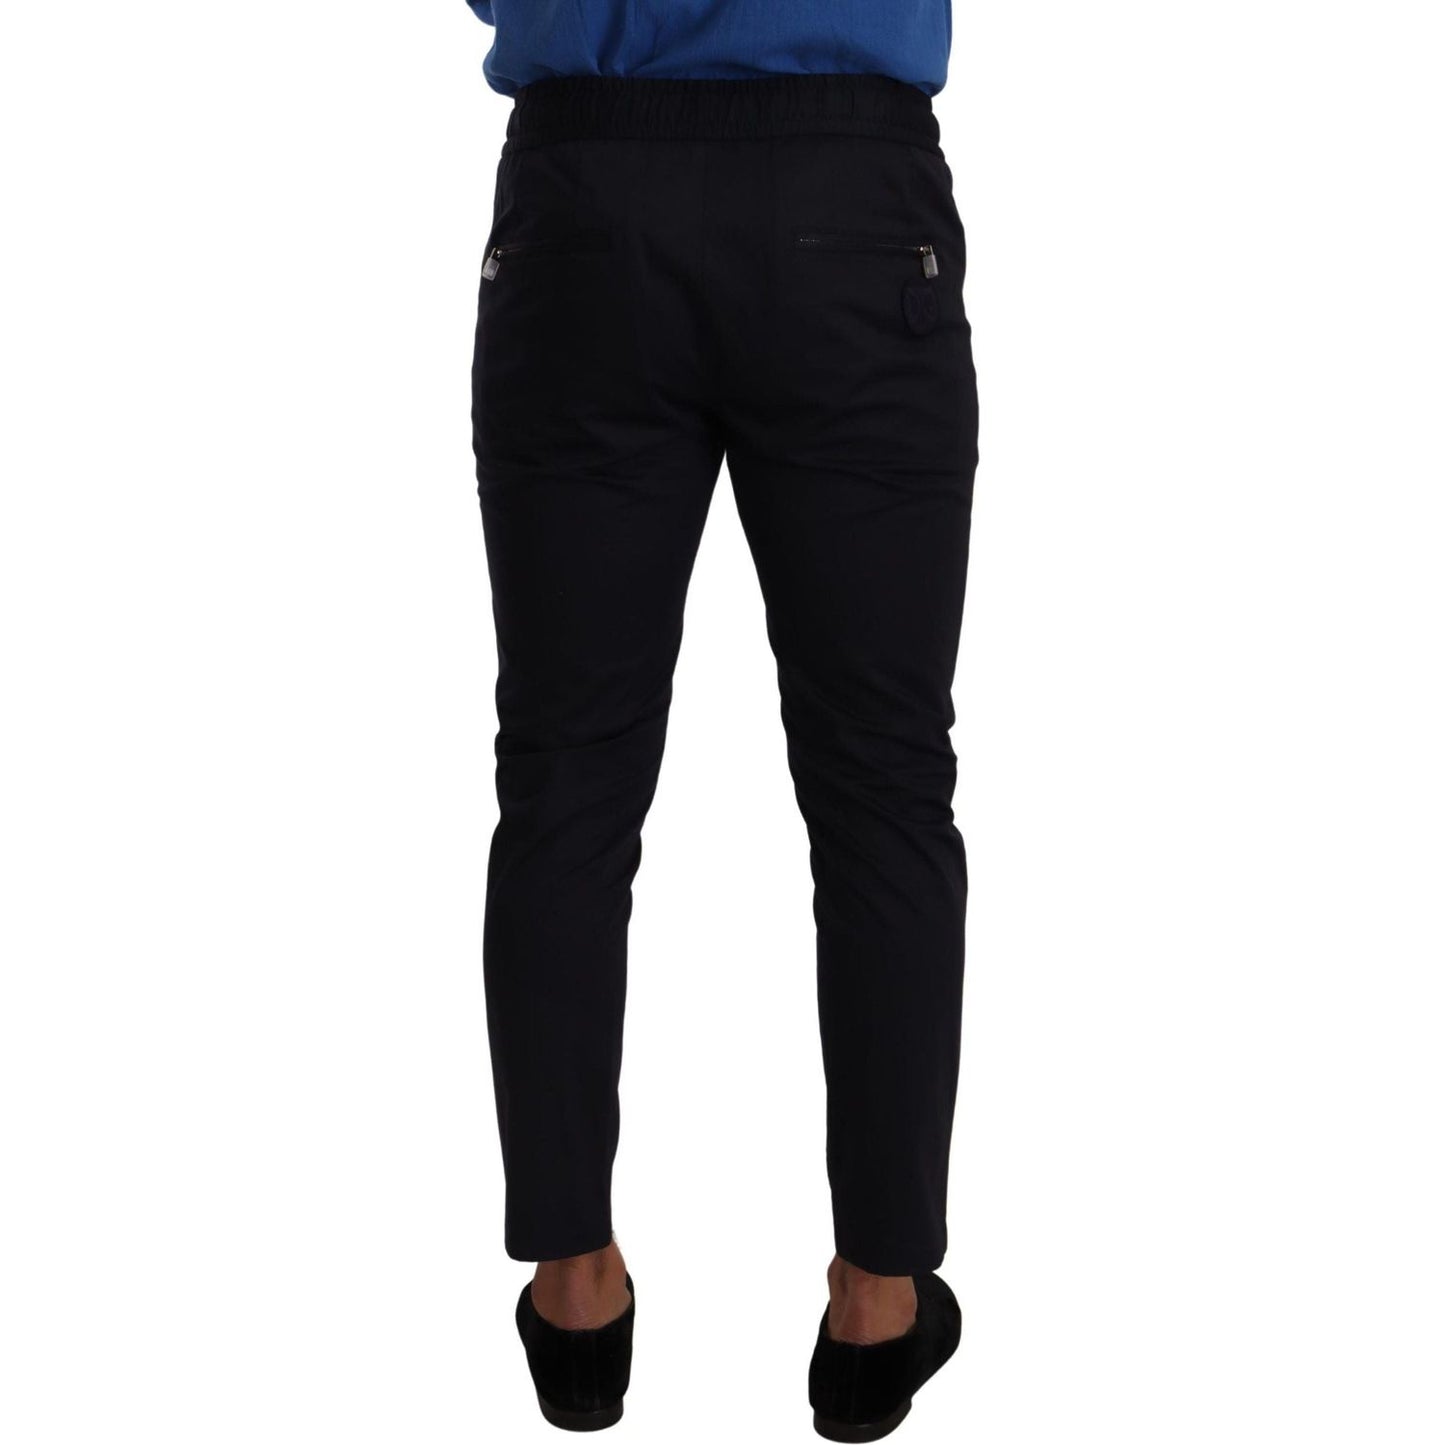 Dolce & Gabbana Elegant Dark Blue Skinny Jogging Pants blue-cotton-stretch-jogging-trouser-pants-1